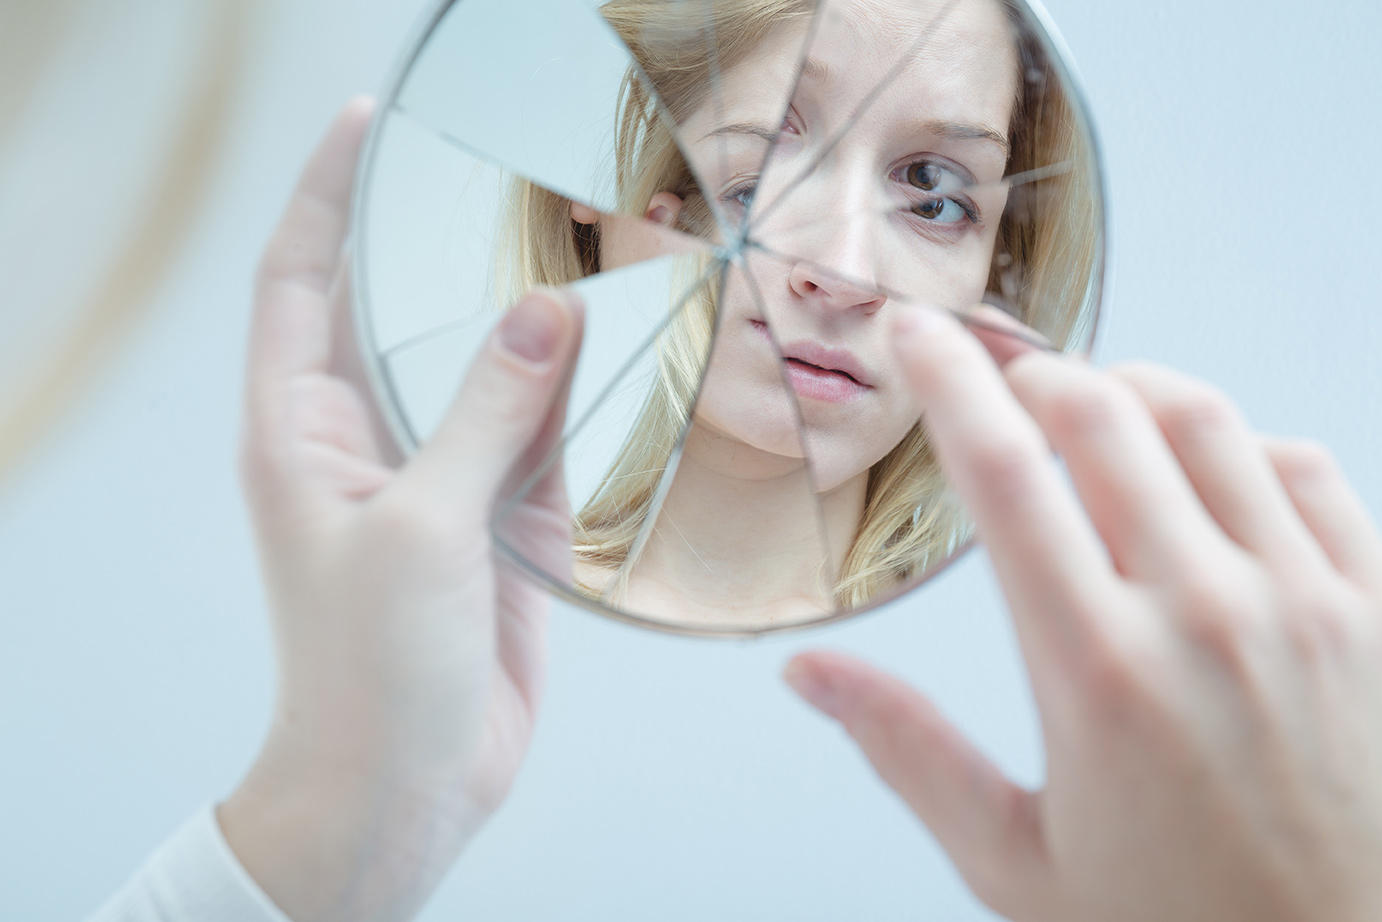 woman's reflection in a broken mirror